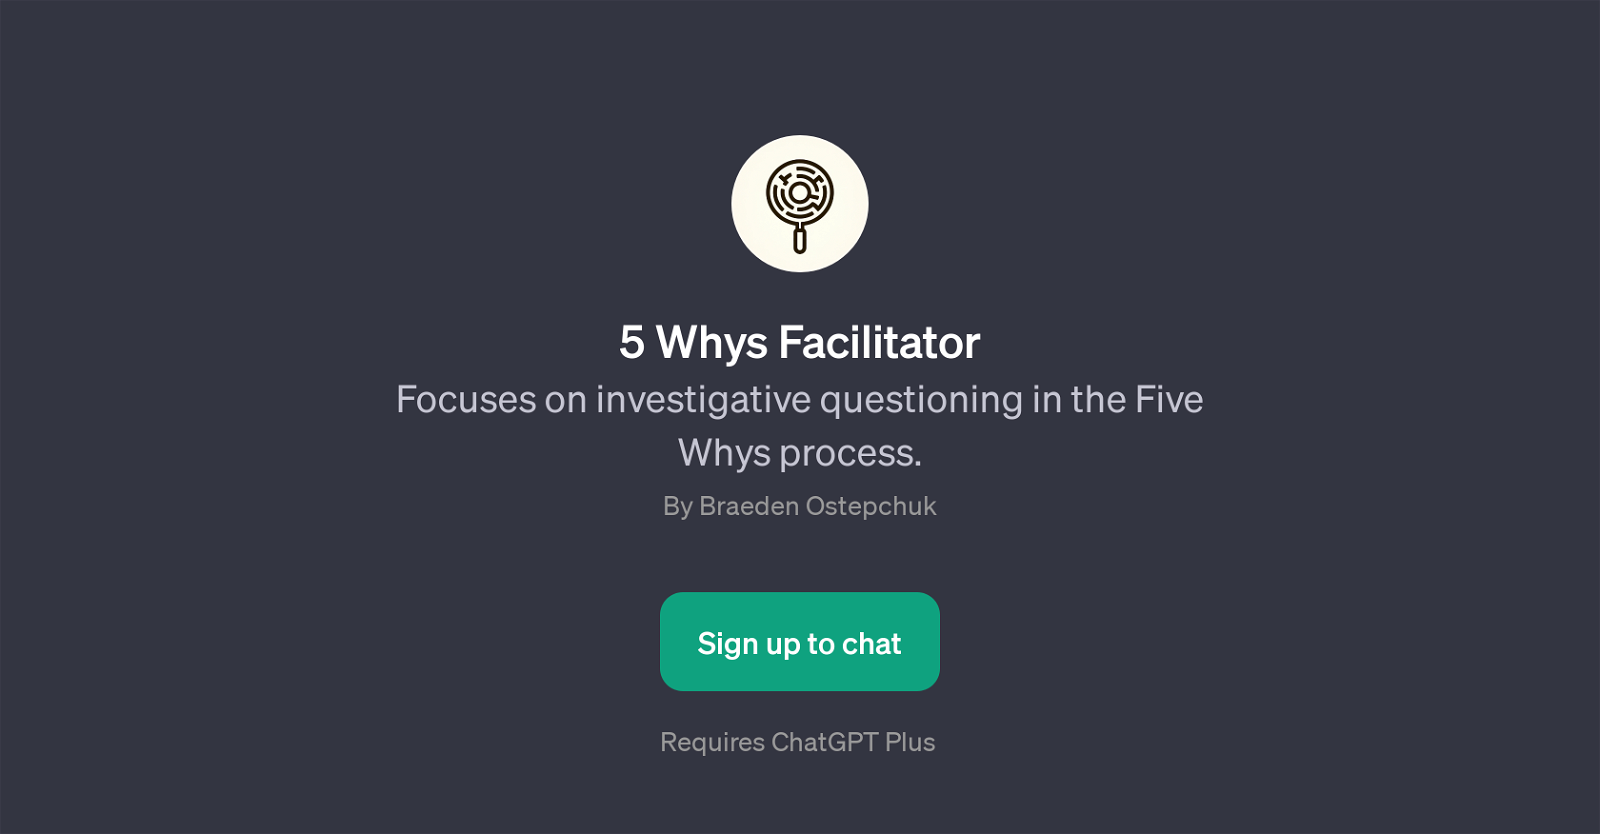 5 Whys Facilitator website